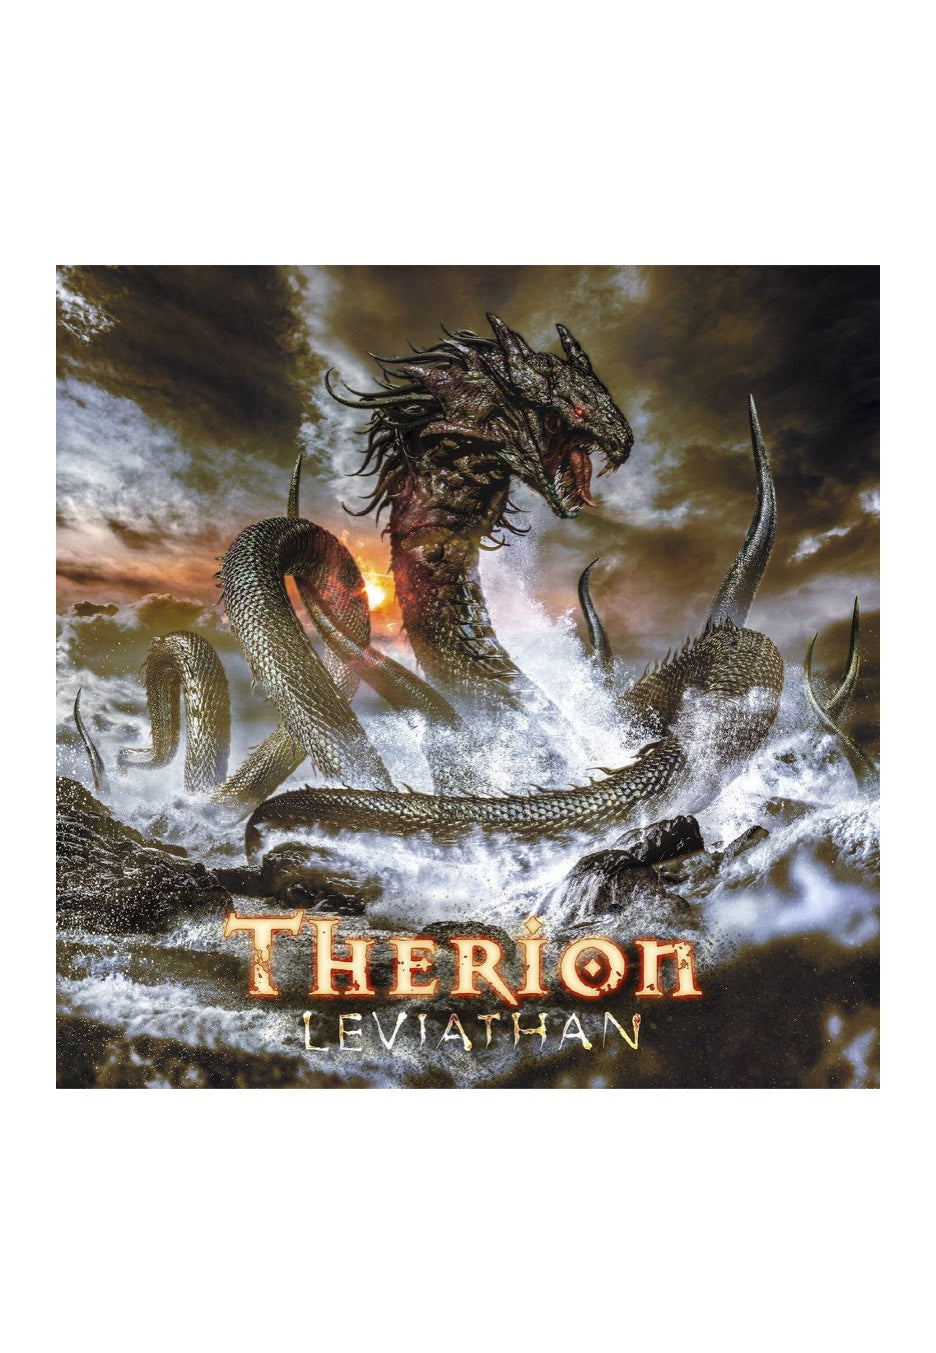 Therion - Leviathan - Digipak CD